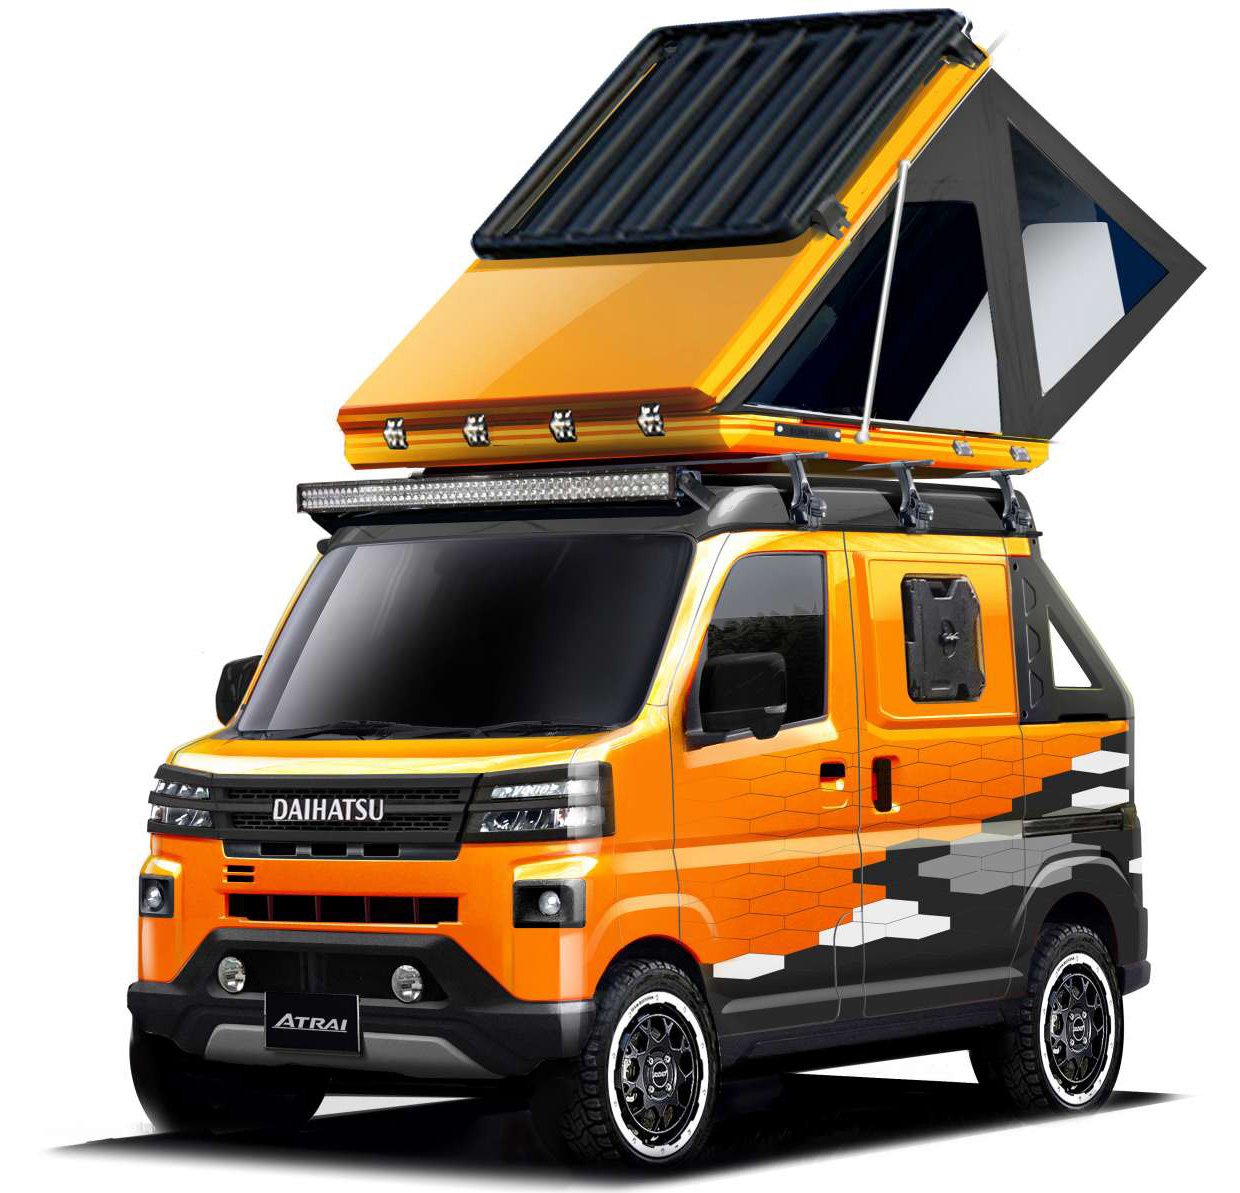 Daihatsu Atrai Deck Camper Is One Cool Little Ride